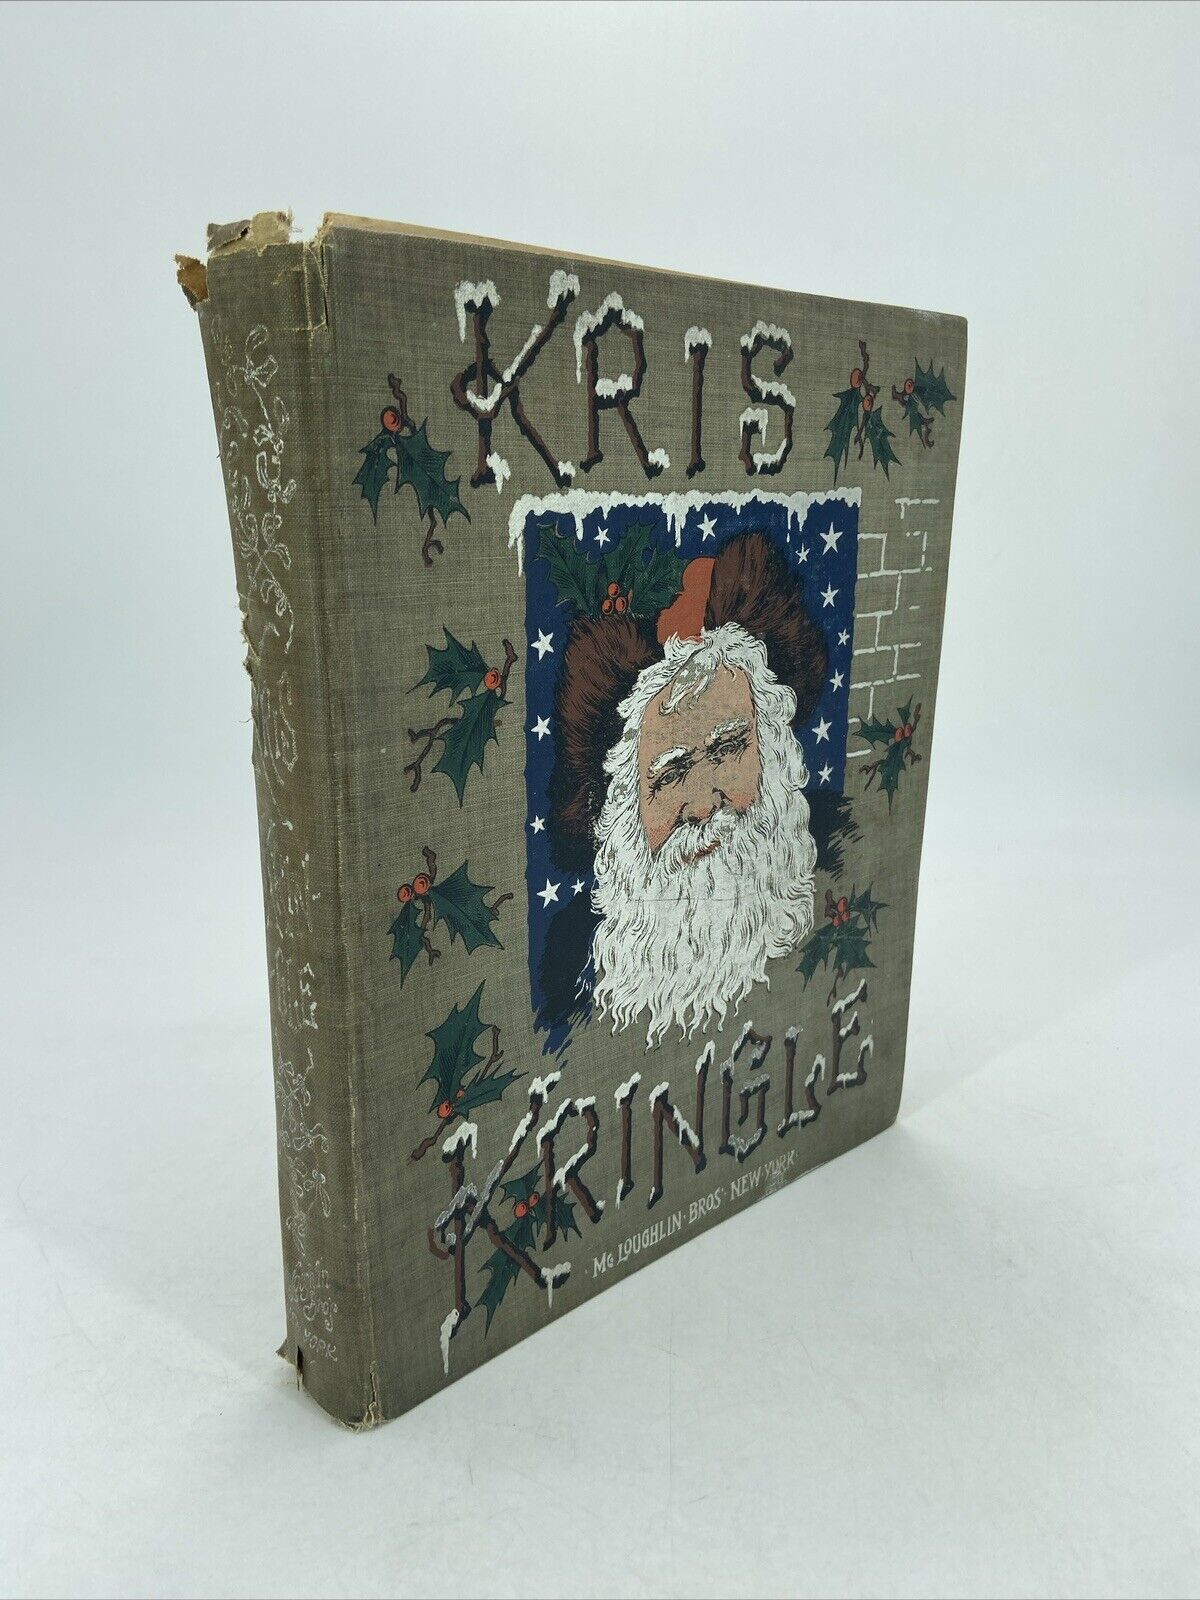 Santa book: KRISS KRINGLE McLoughlin Bros 1884 Hardcover